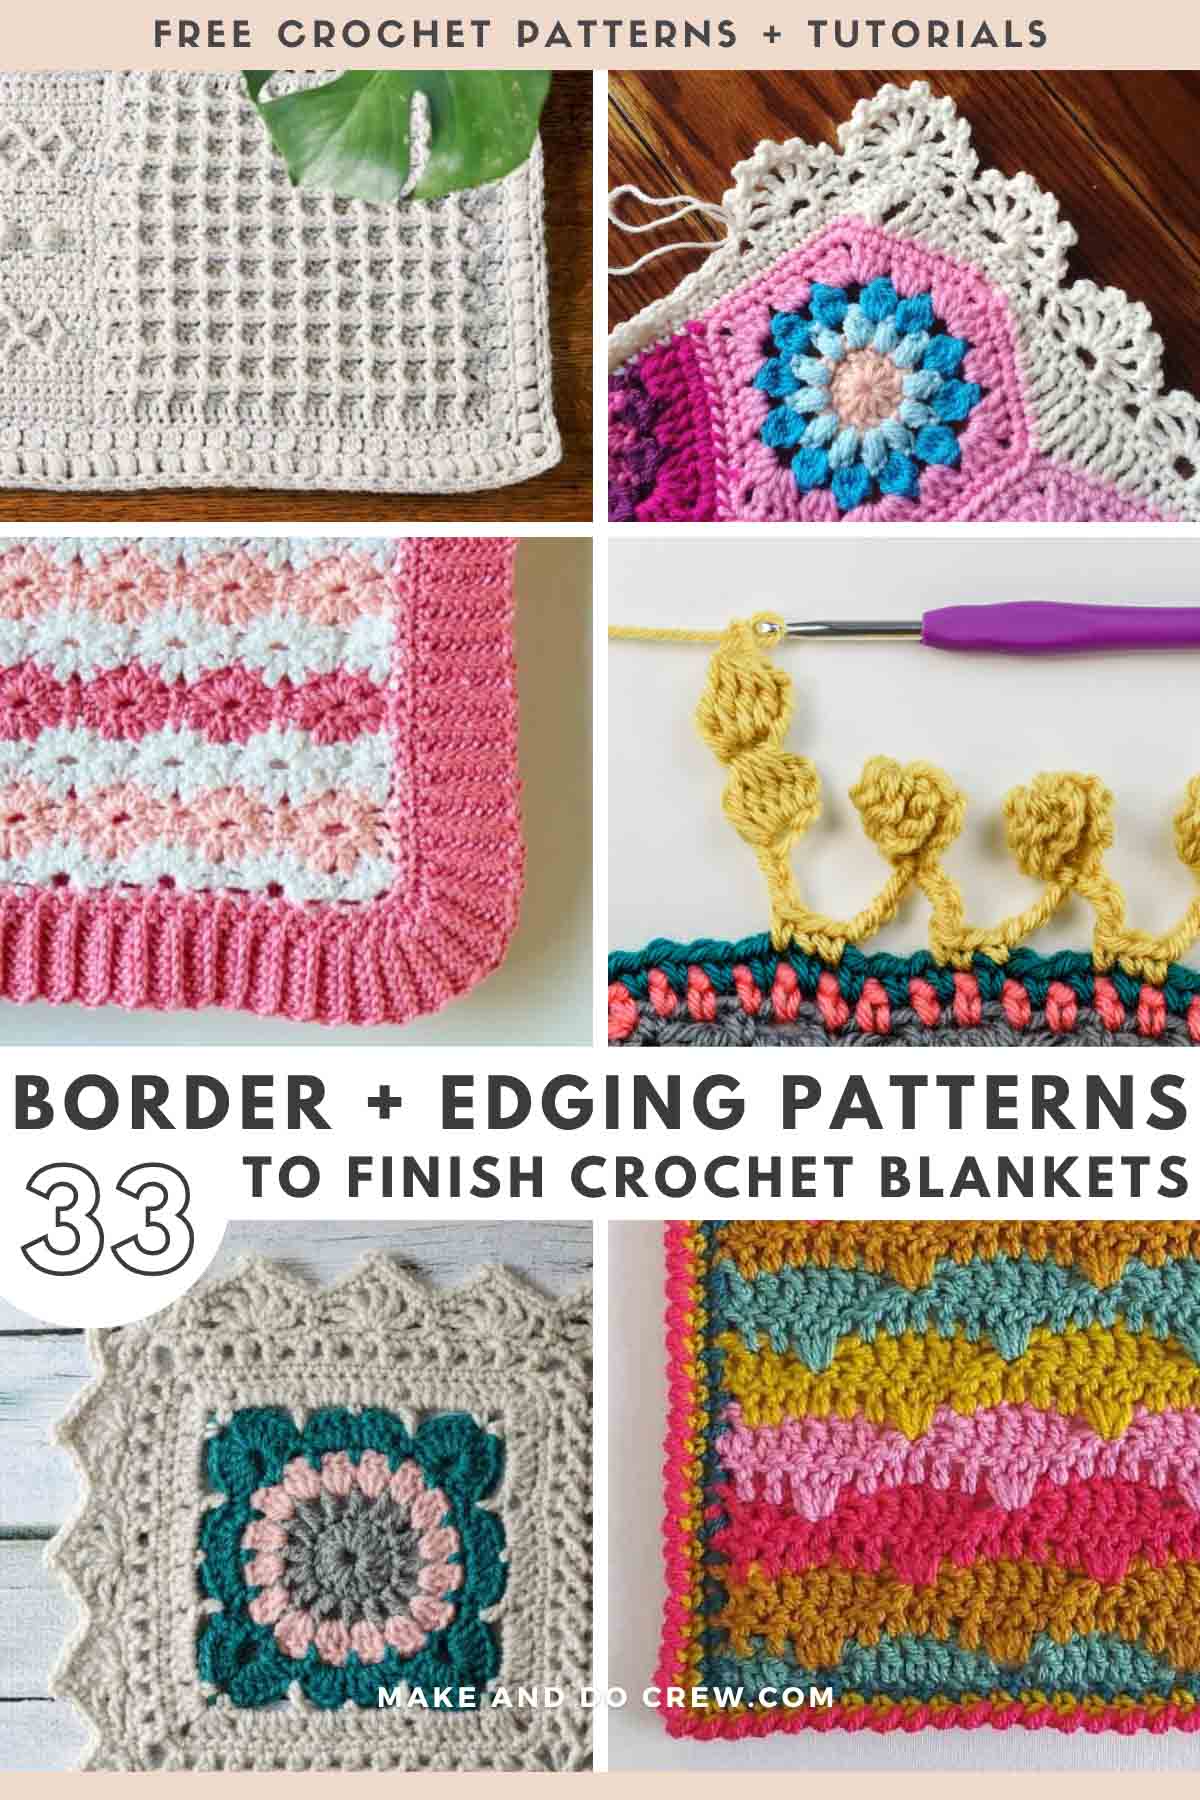 https://makeanddocrew.com/wp-content/uploads/2023/02/free-crochet-border-patterns.jpg